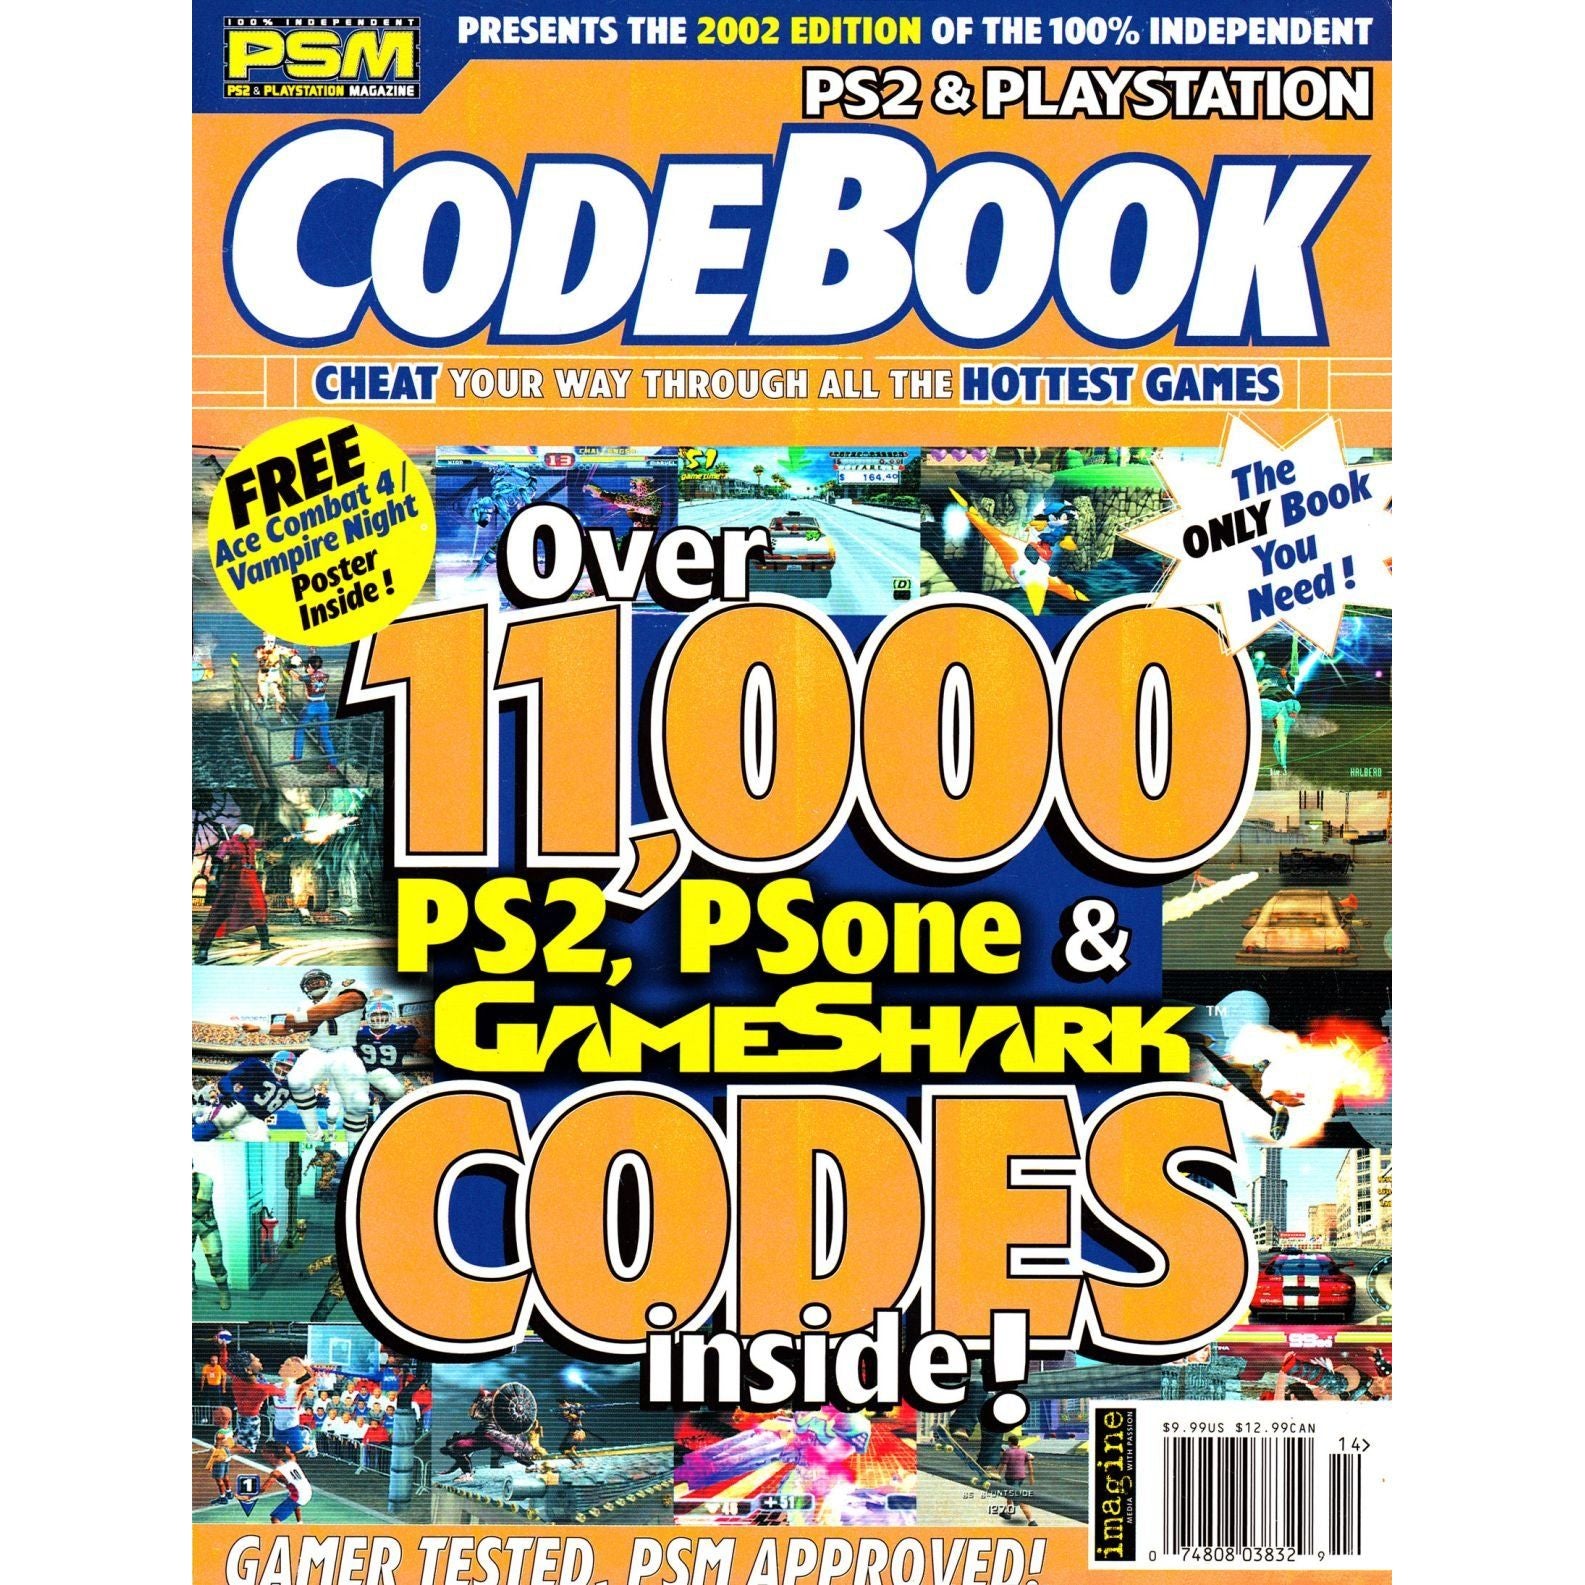 PSM Magazine presents PS2 & PlayStation CodeBook 2002